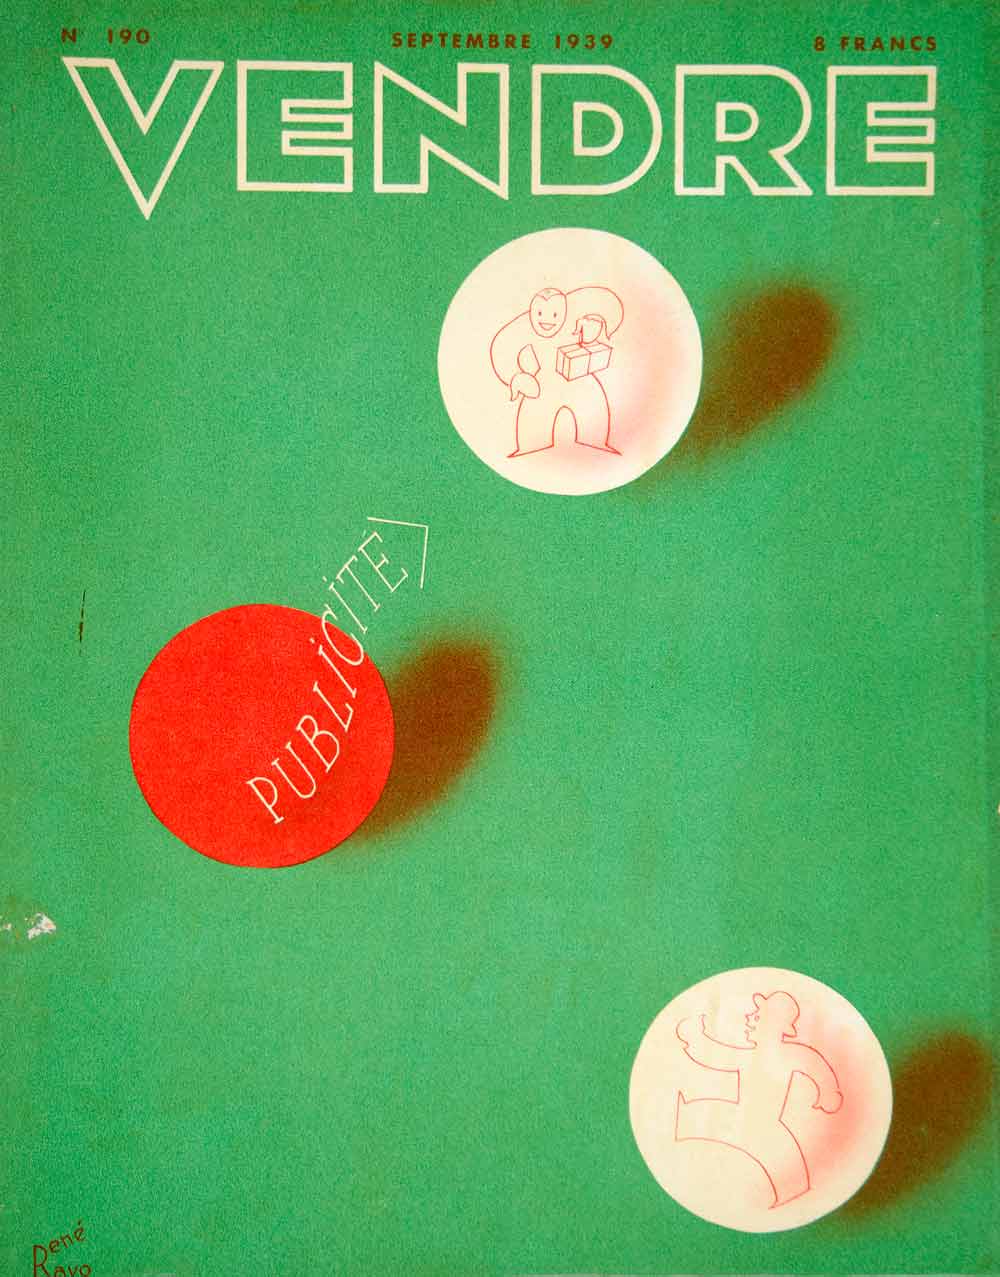 1939 Cover Vendre French Magazine Rene Ravo Art Deco Illustration Publicity VEN9